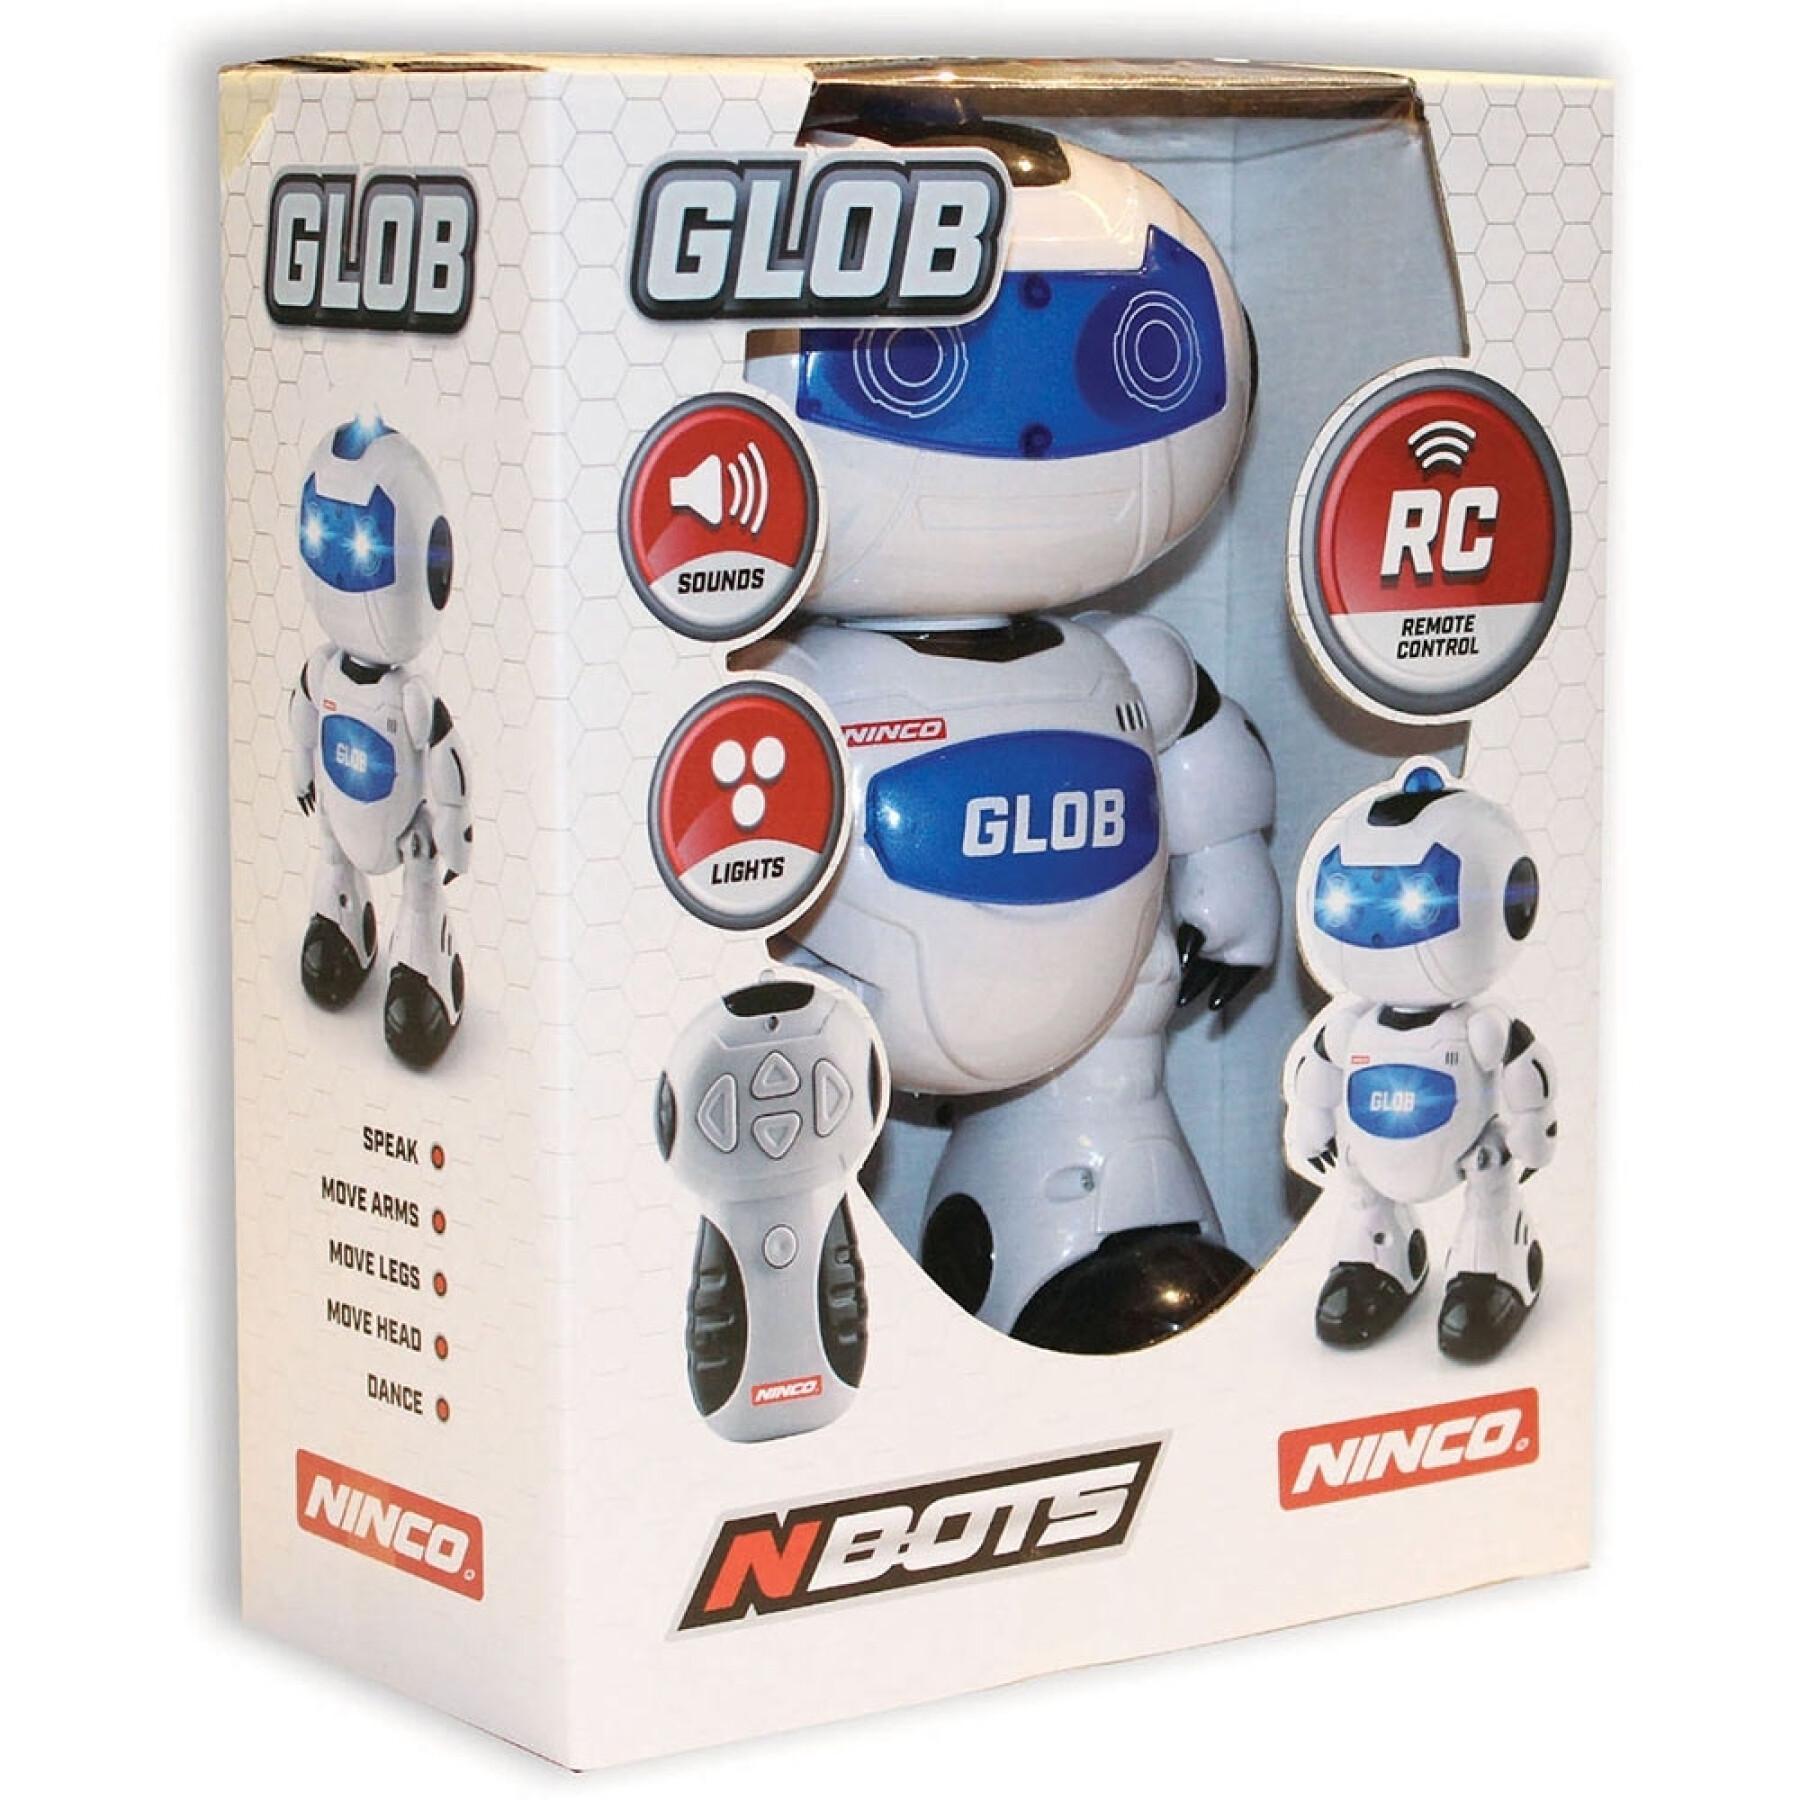 Robot teledirigido que habla inglés Ninco Glob